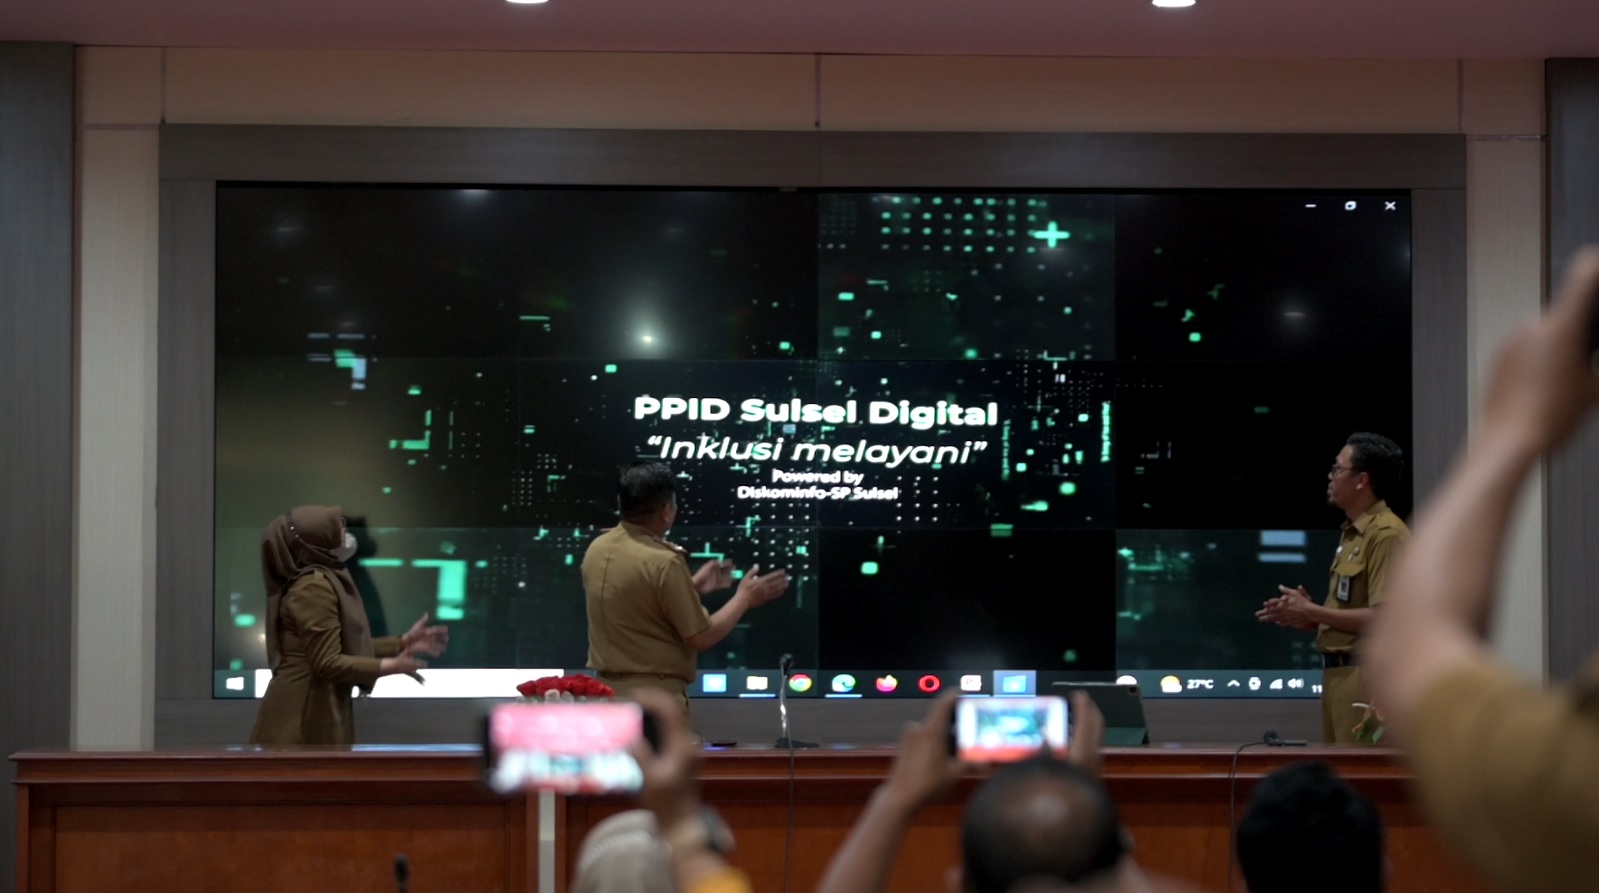 Pemprov Sulsel Launching PPID Digital, "Inklusi Melayani"